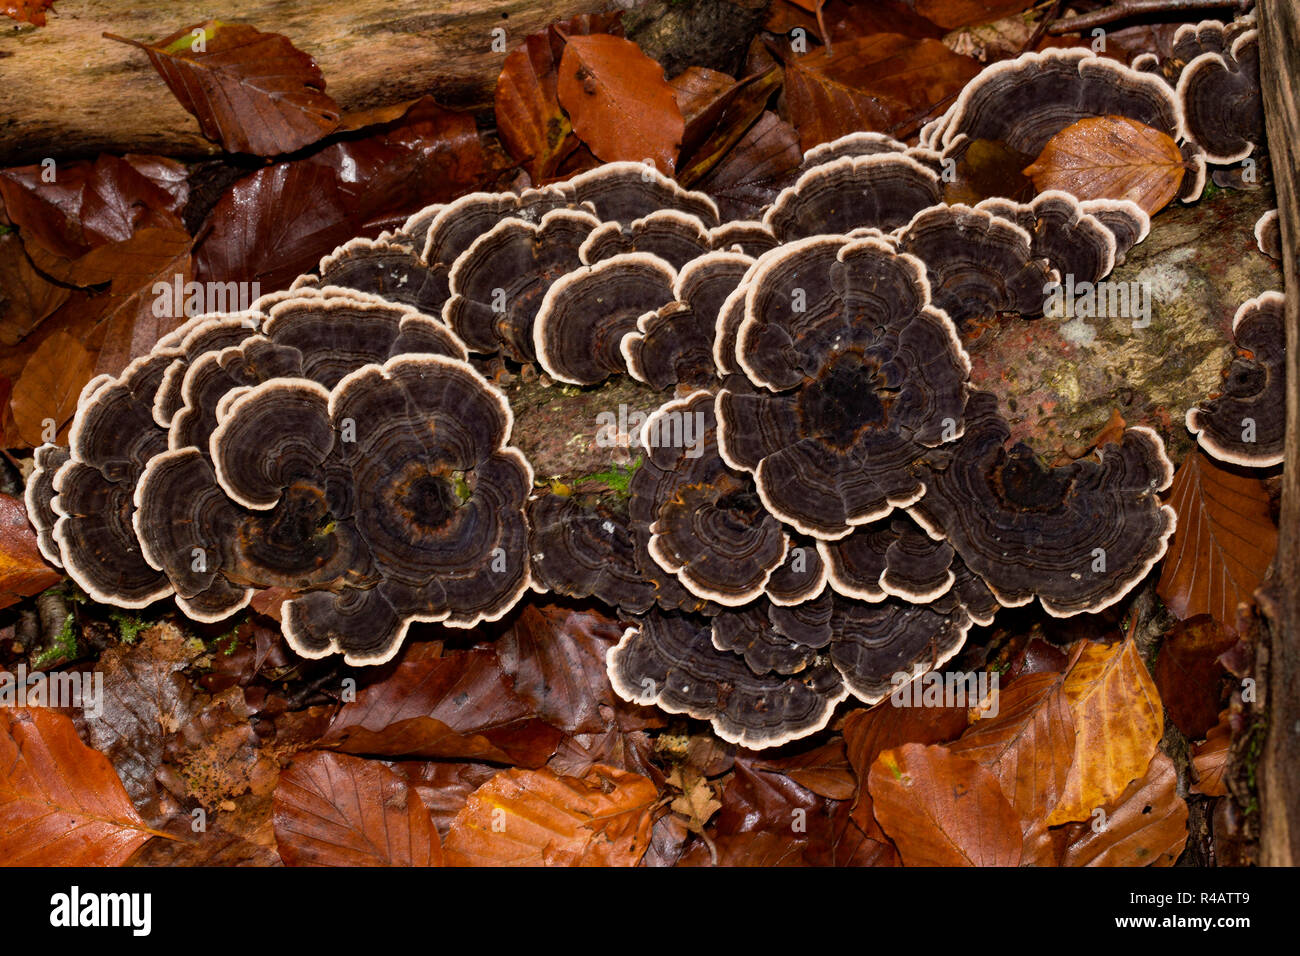 turkey tail mushroom, (Trametes versicolor) Stock Photo